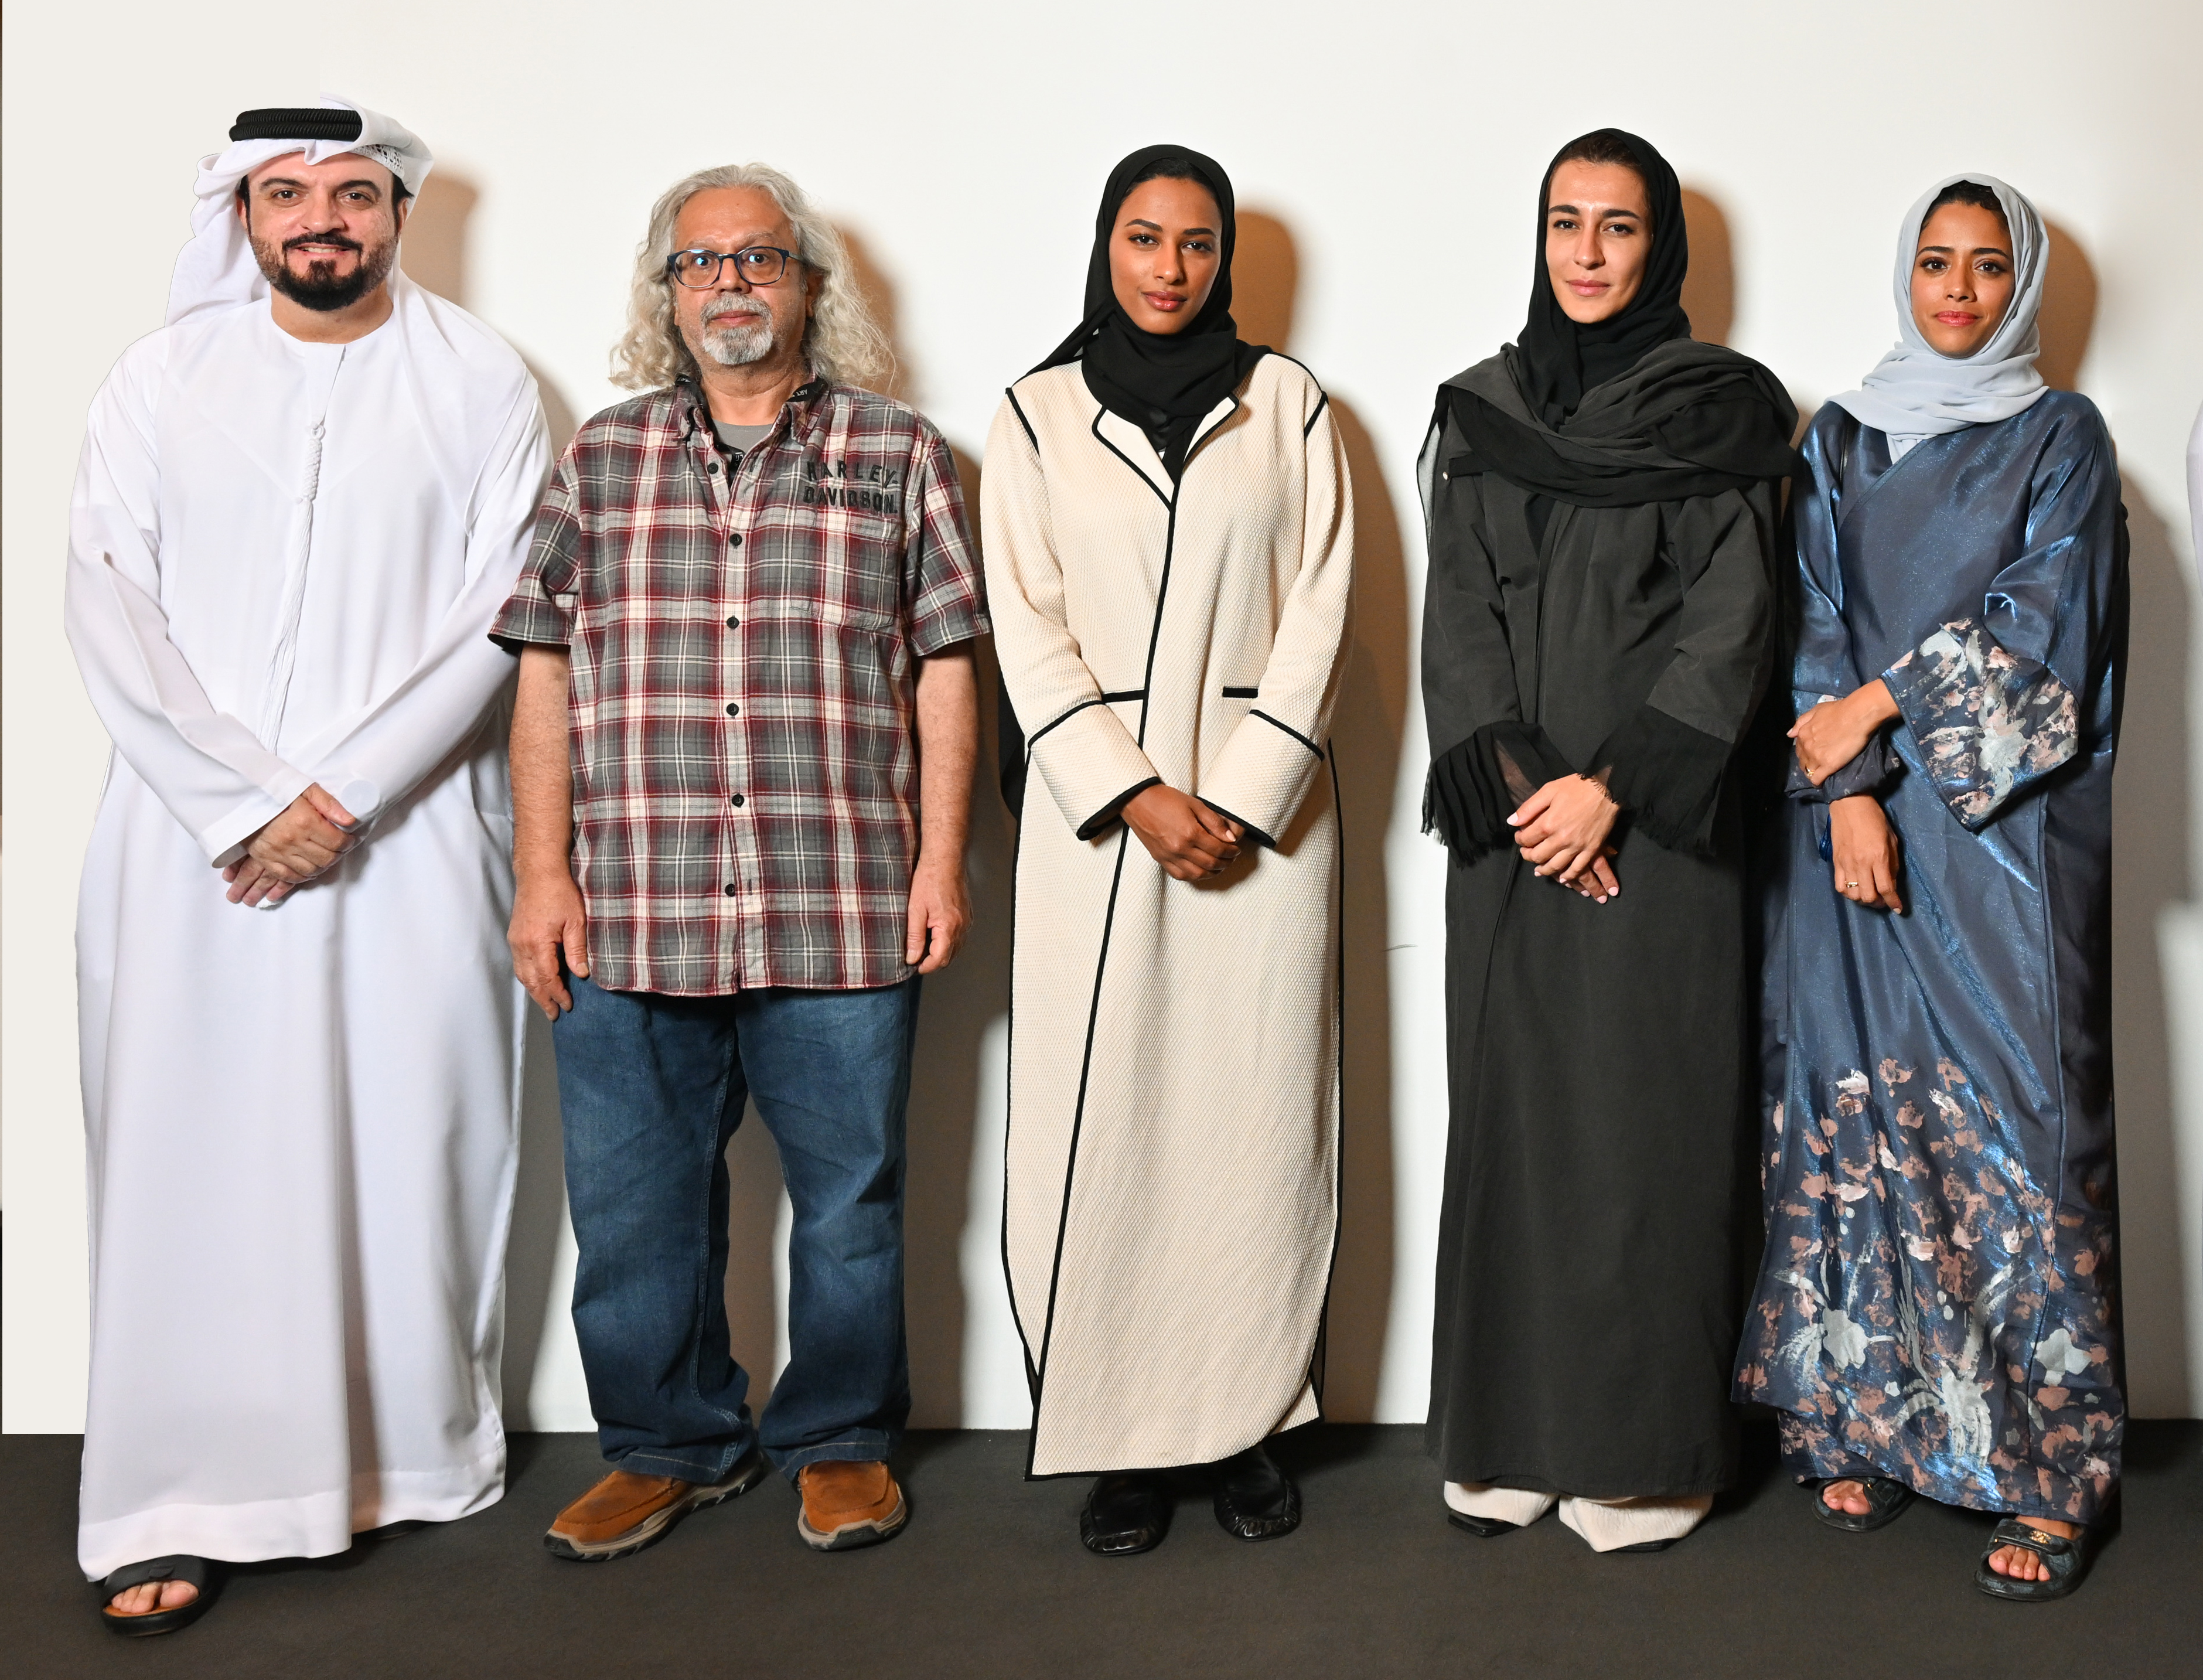 DUBAI PUBLIC ART SHORTLISTS ARTISTS FOR THE INAUGURAL LANDMARK COMMISSION WITH ART DUBAI